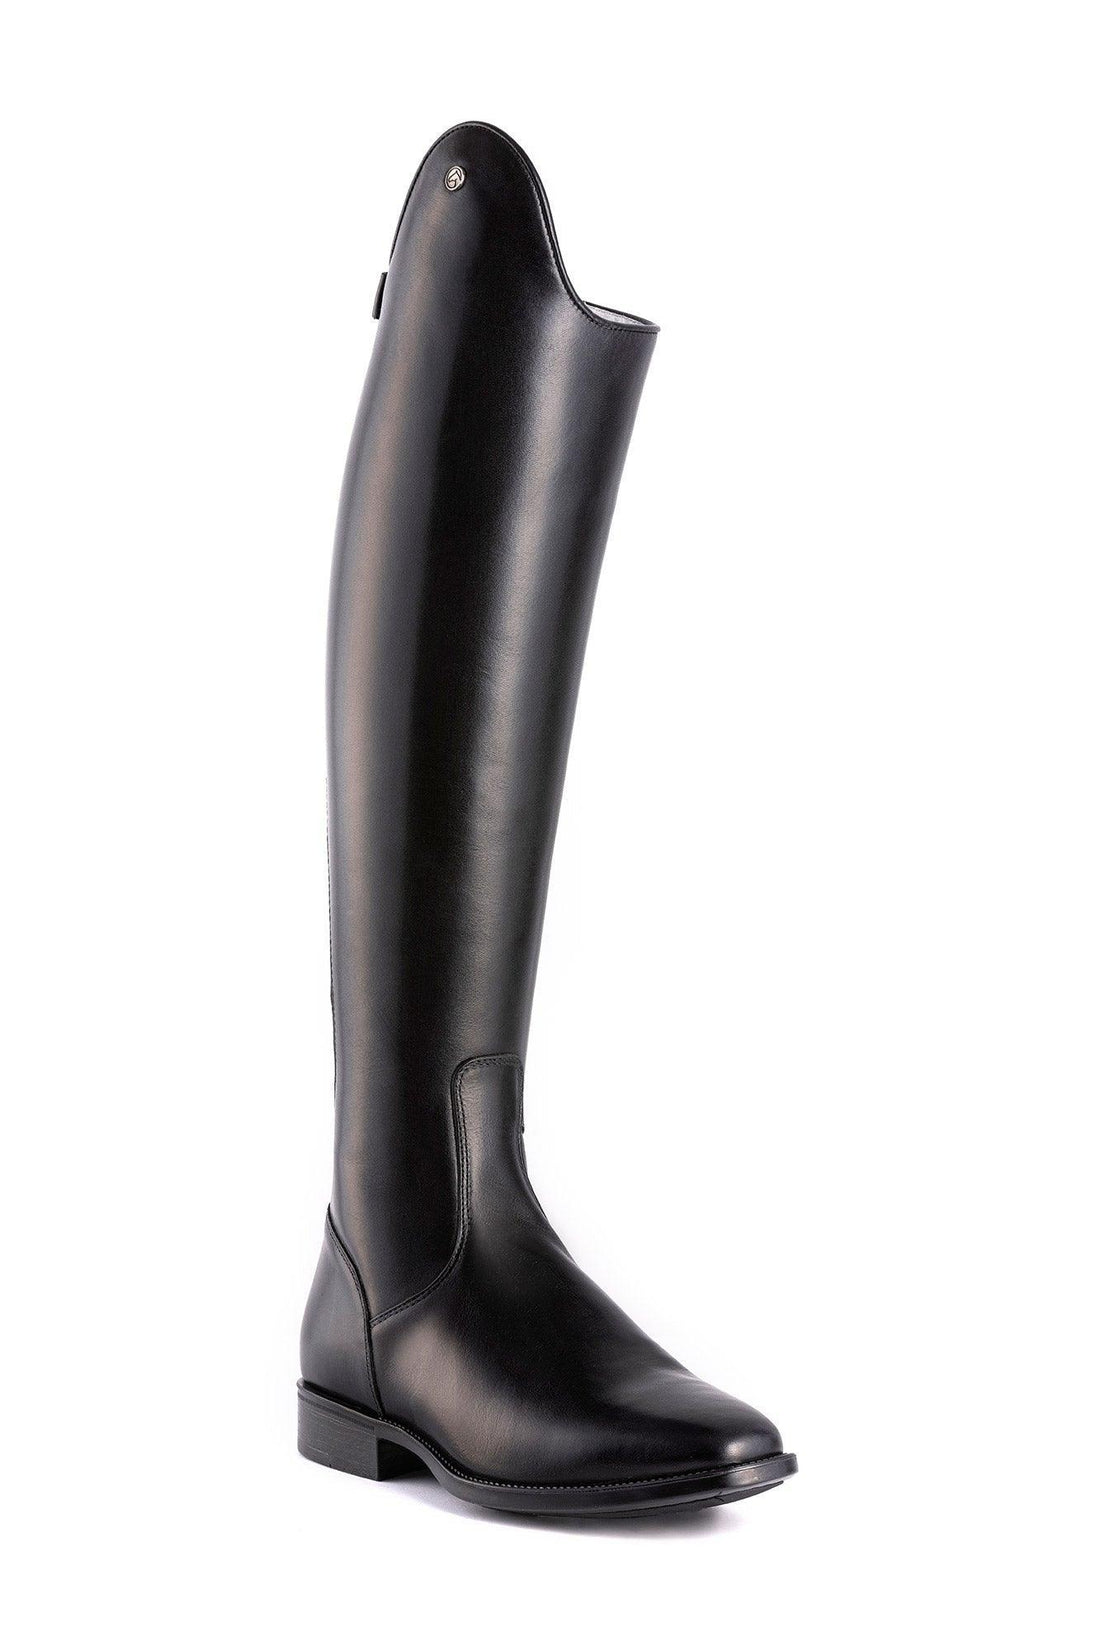 De Niro Tricolore Puro dress boot smooth black leather - HorseworldEU